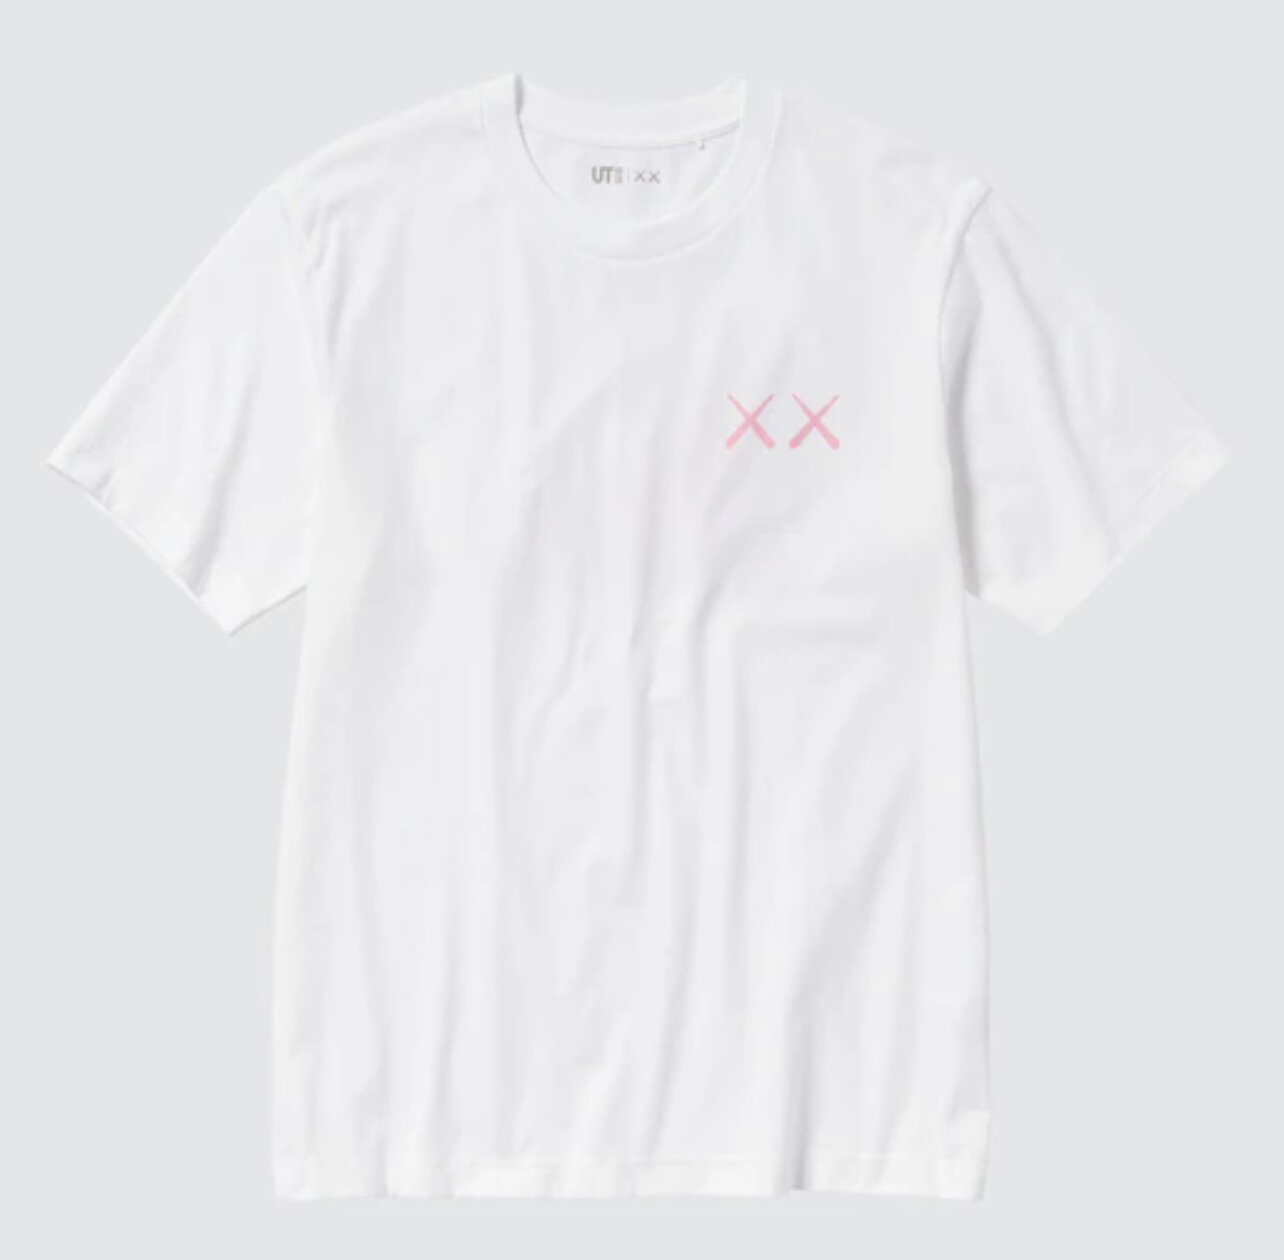 Nina Chanel Abney Black Libertee White T-Shirt 2020 Brand New Size XL KAWS